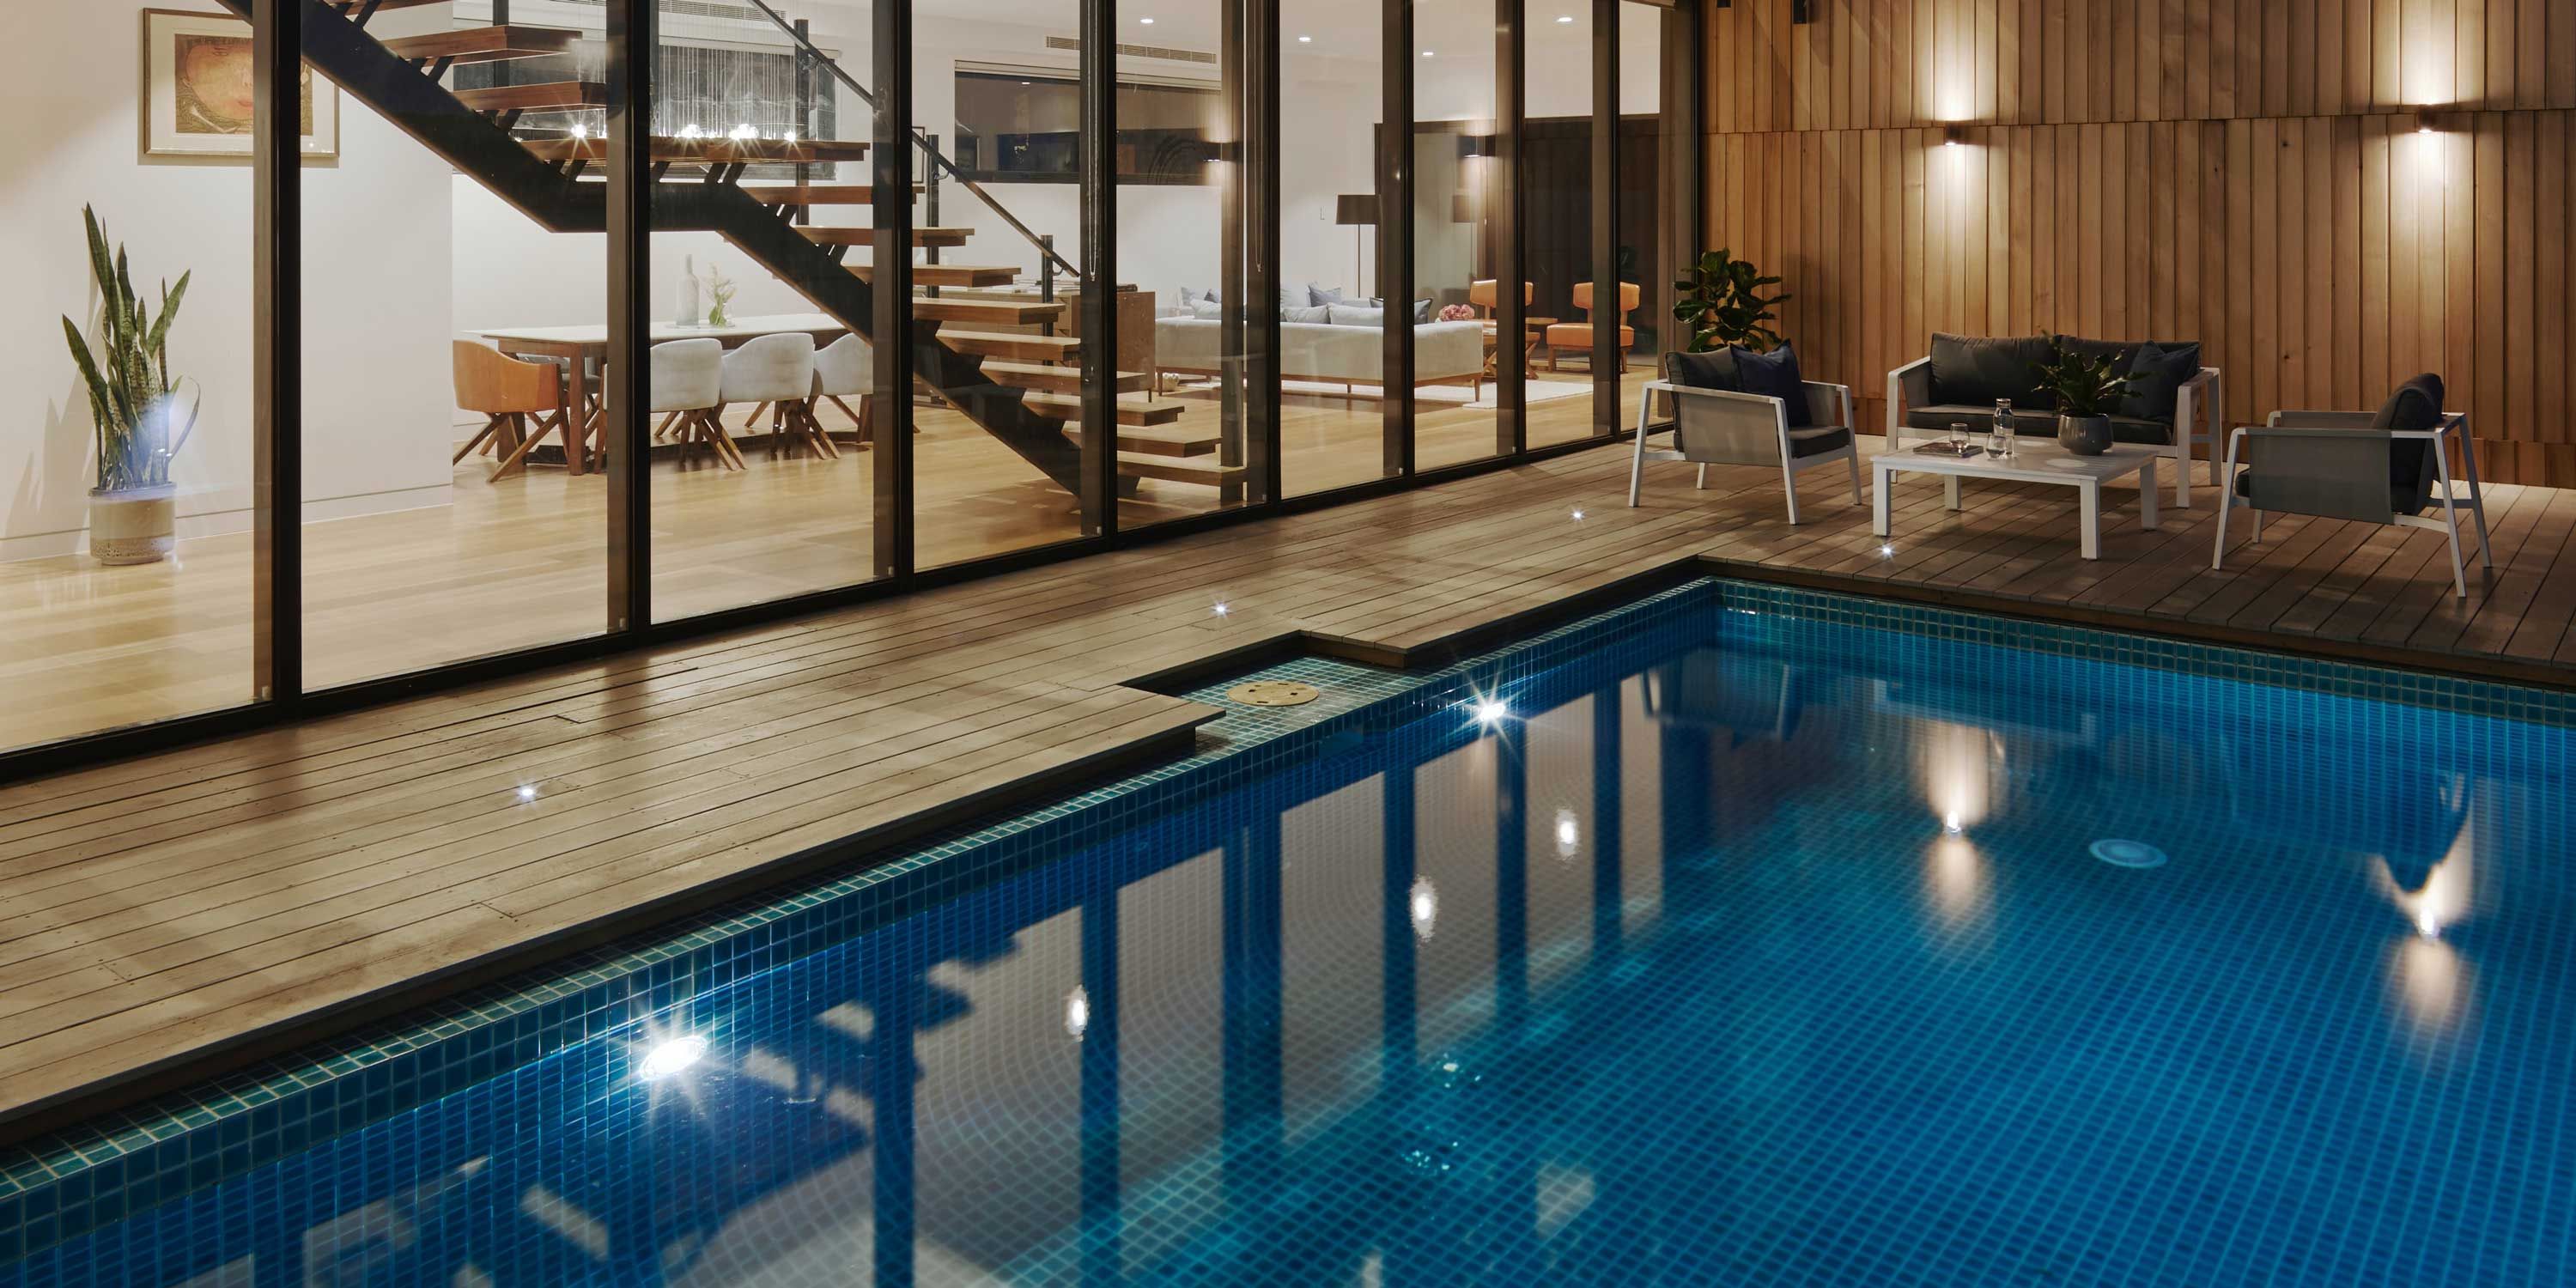 Tile pool, wood paneling, large windows